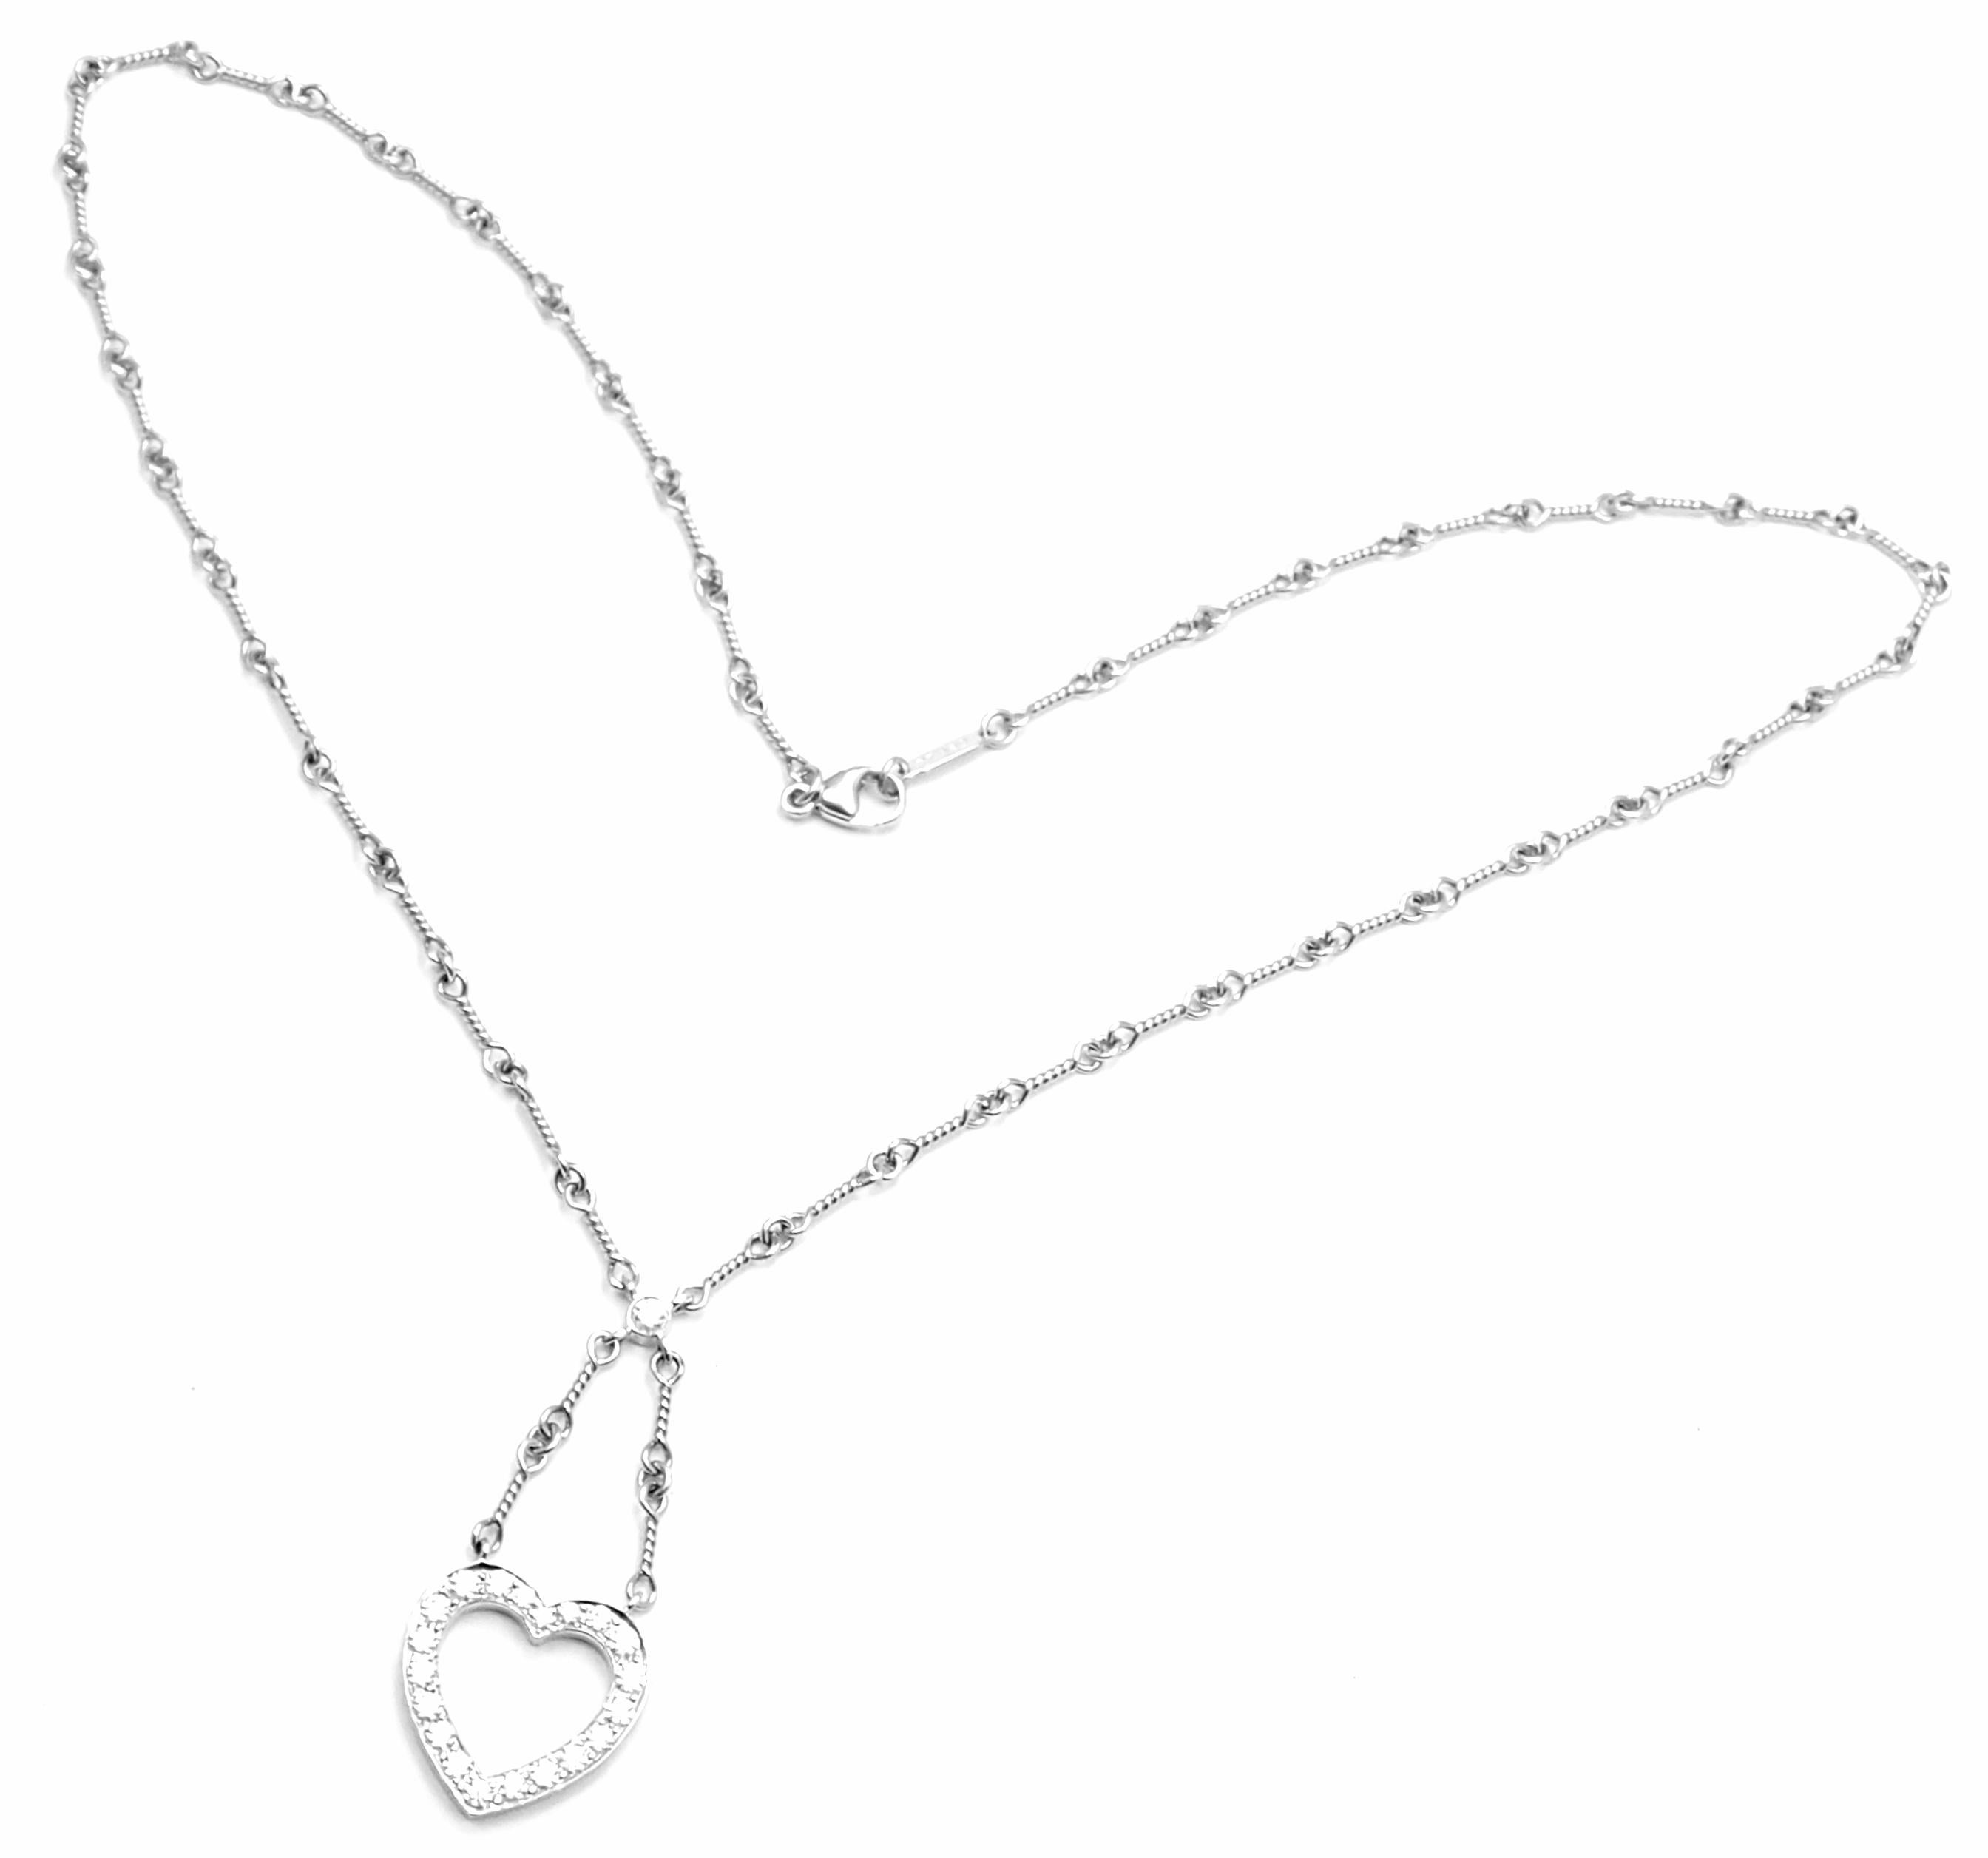 open heart necklace